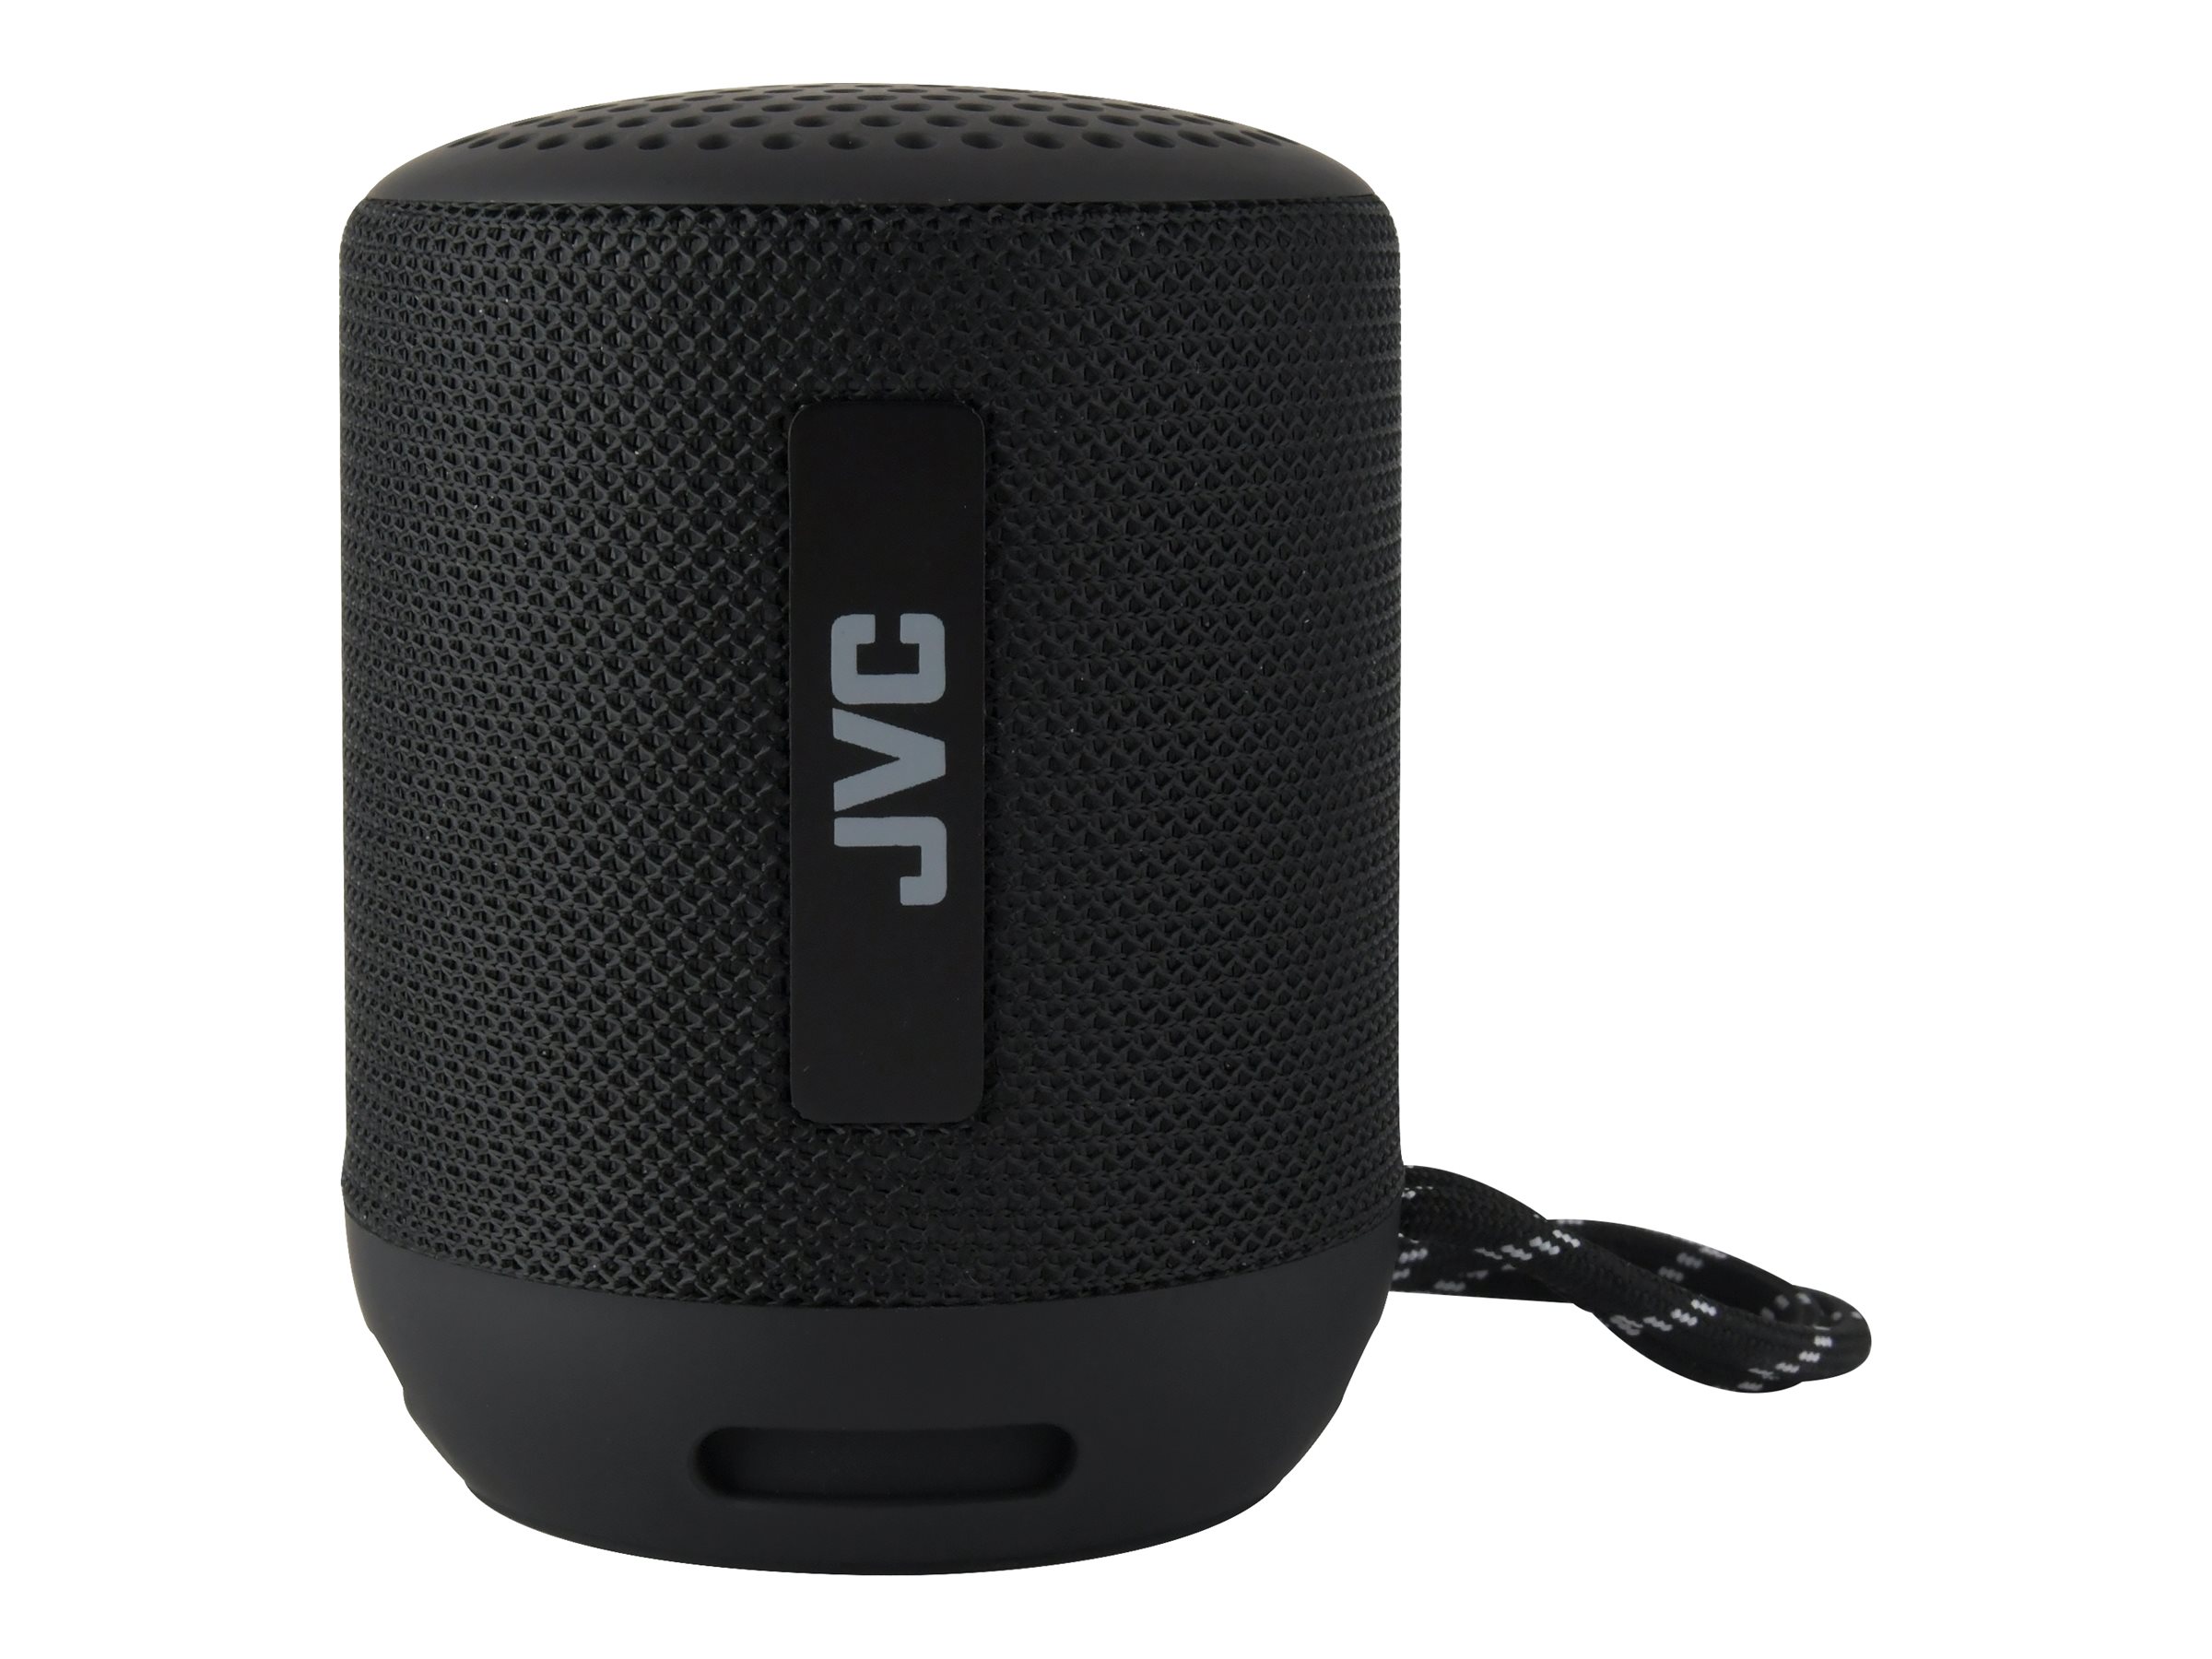 JVC Portable Bluetooth Speaker - Black - SP-SG2BT